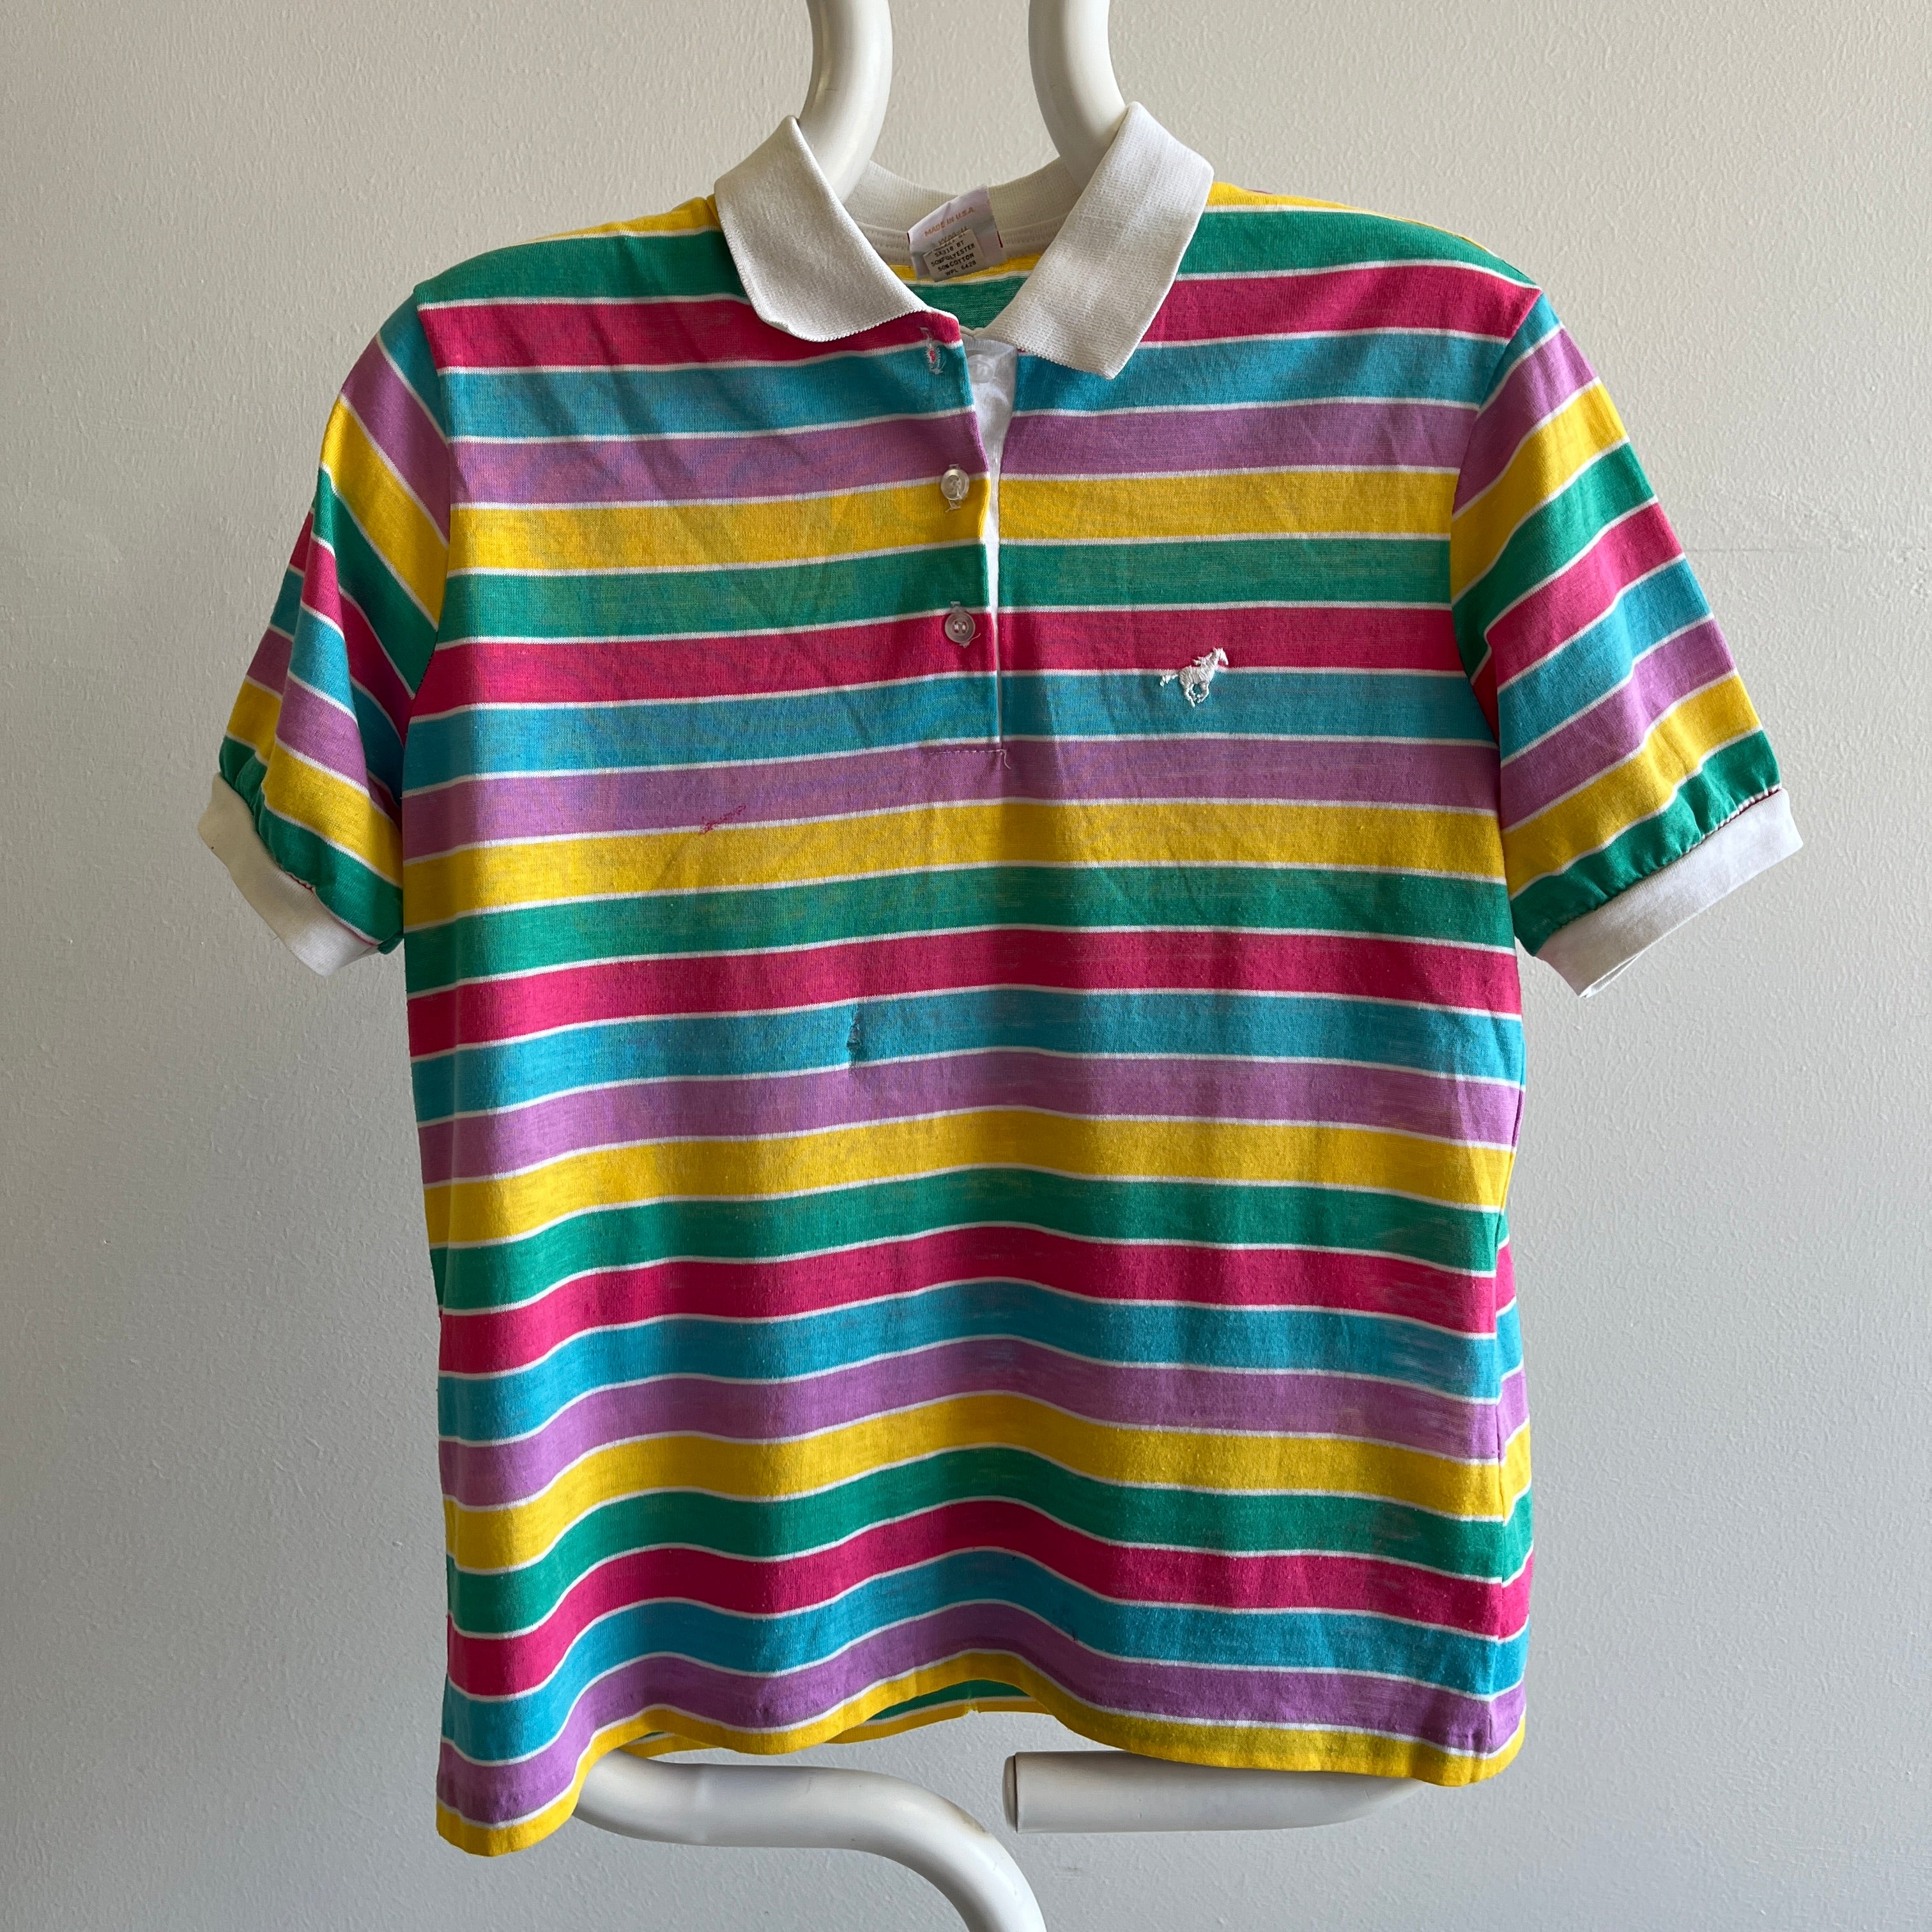 1980s Wrangler Brand SUper Rad Striped Polo T-Shirt - OMG!